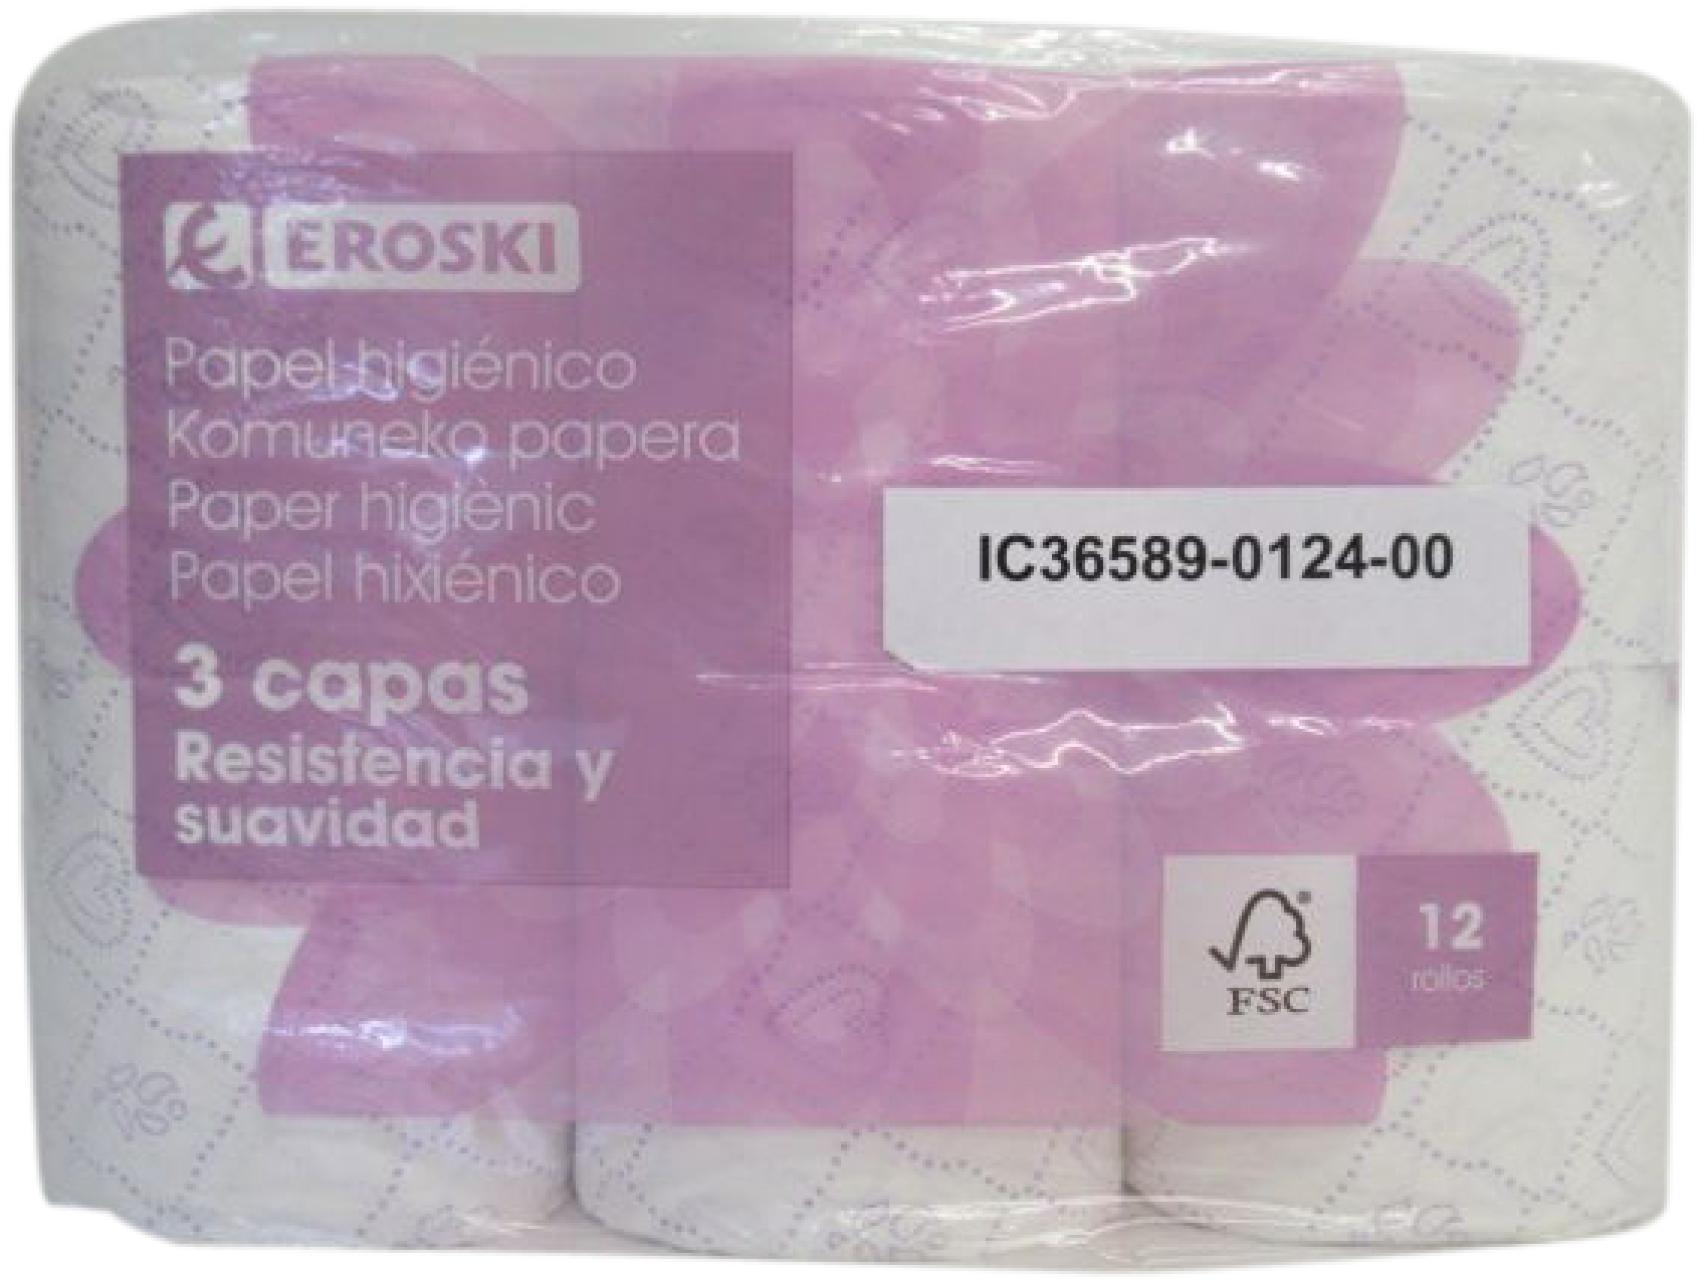 Papel higiénico 3 capas EROSKI, paquete 12 rollos